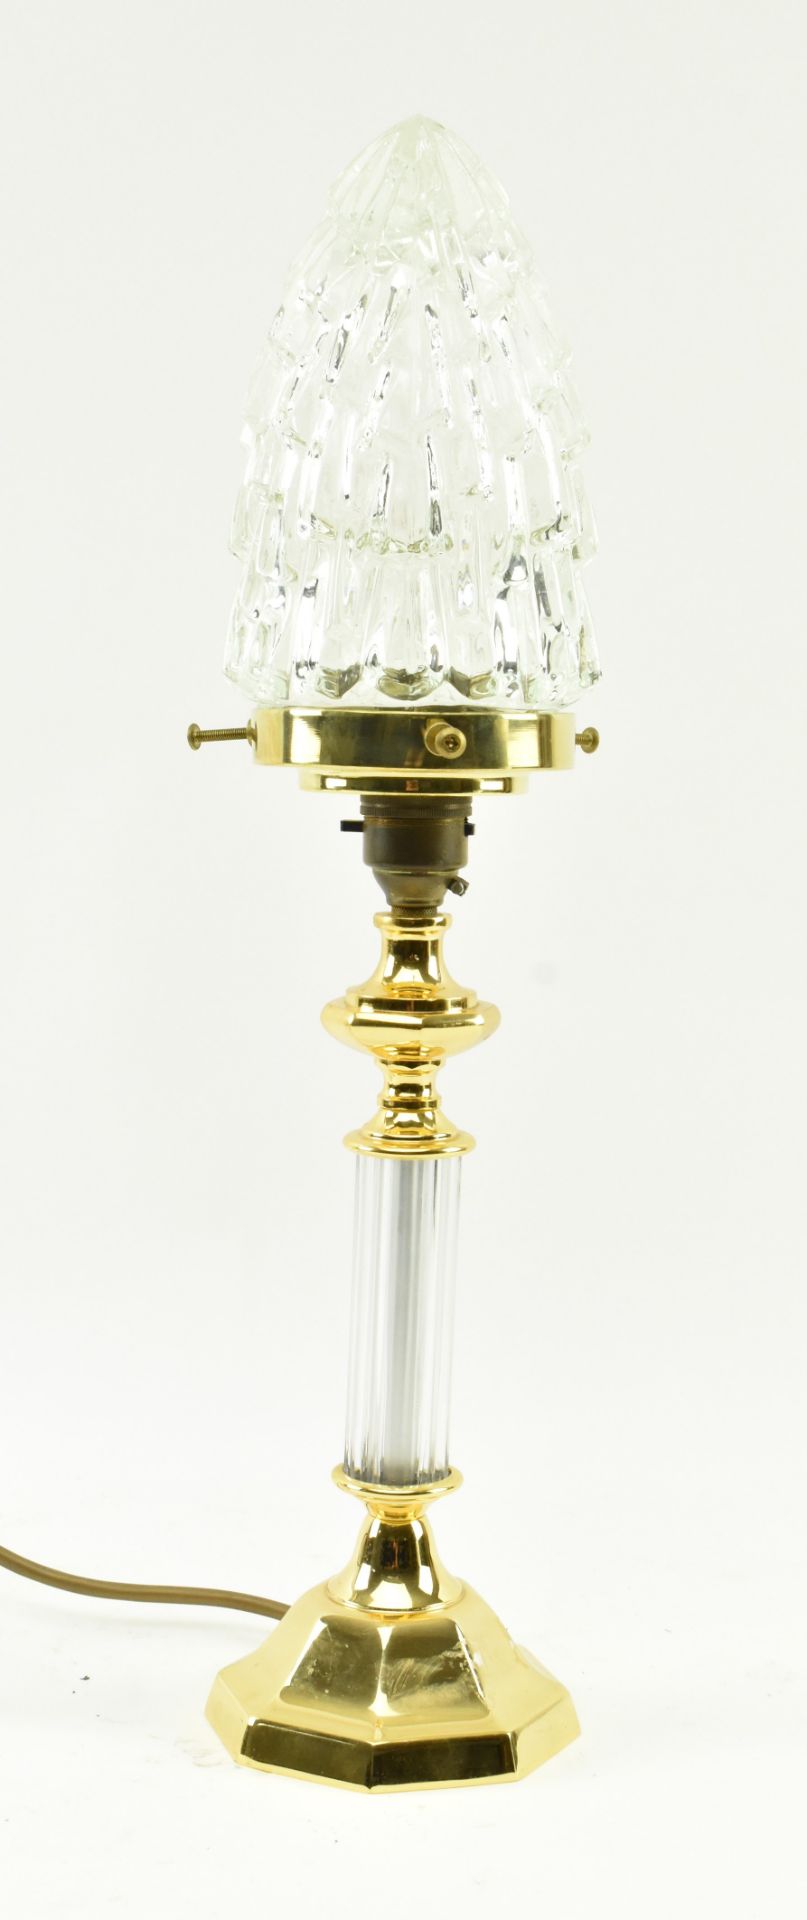 ART DECO STYLE GILT METAL & GLASS DESK TABLE LAMP